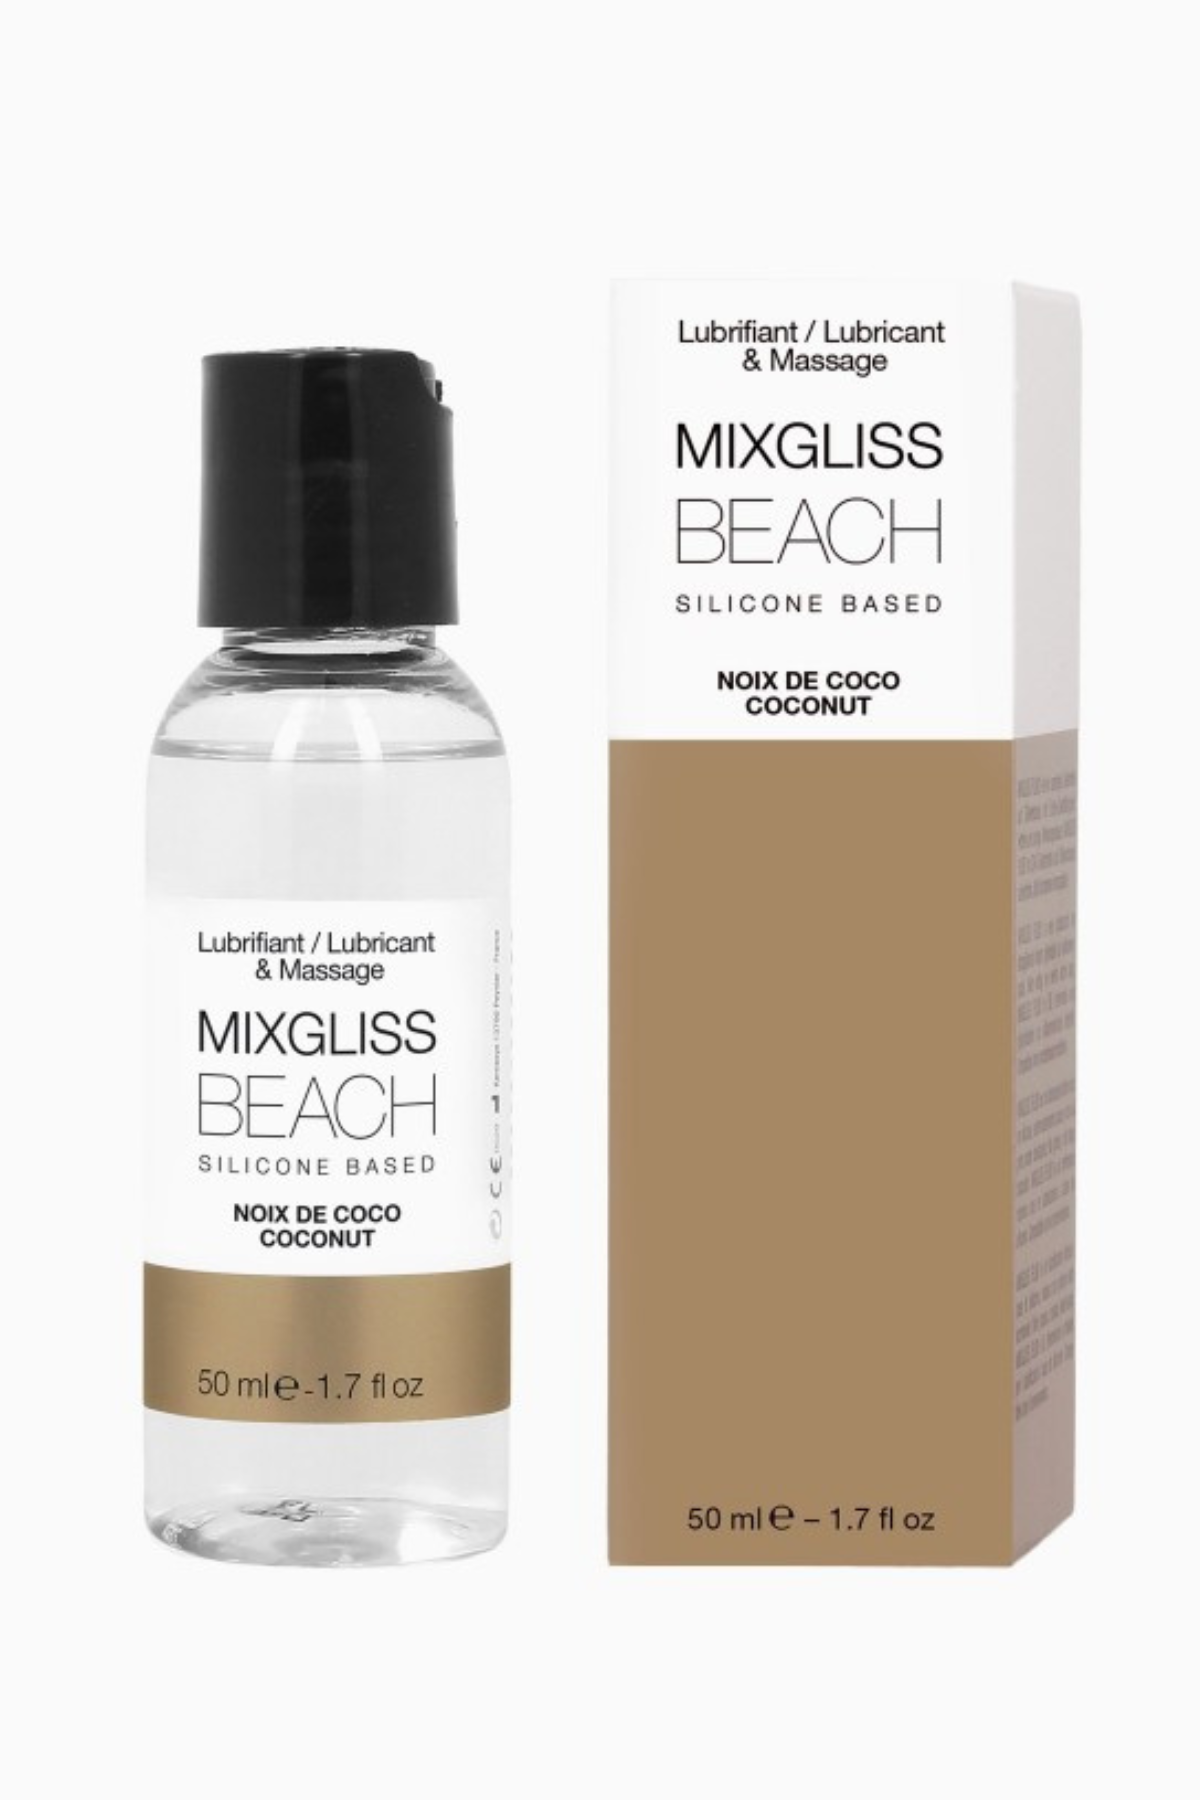 Mixgliss Beach Coconut Silicone-Based Lubricant